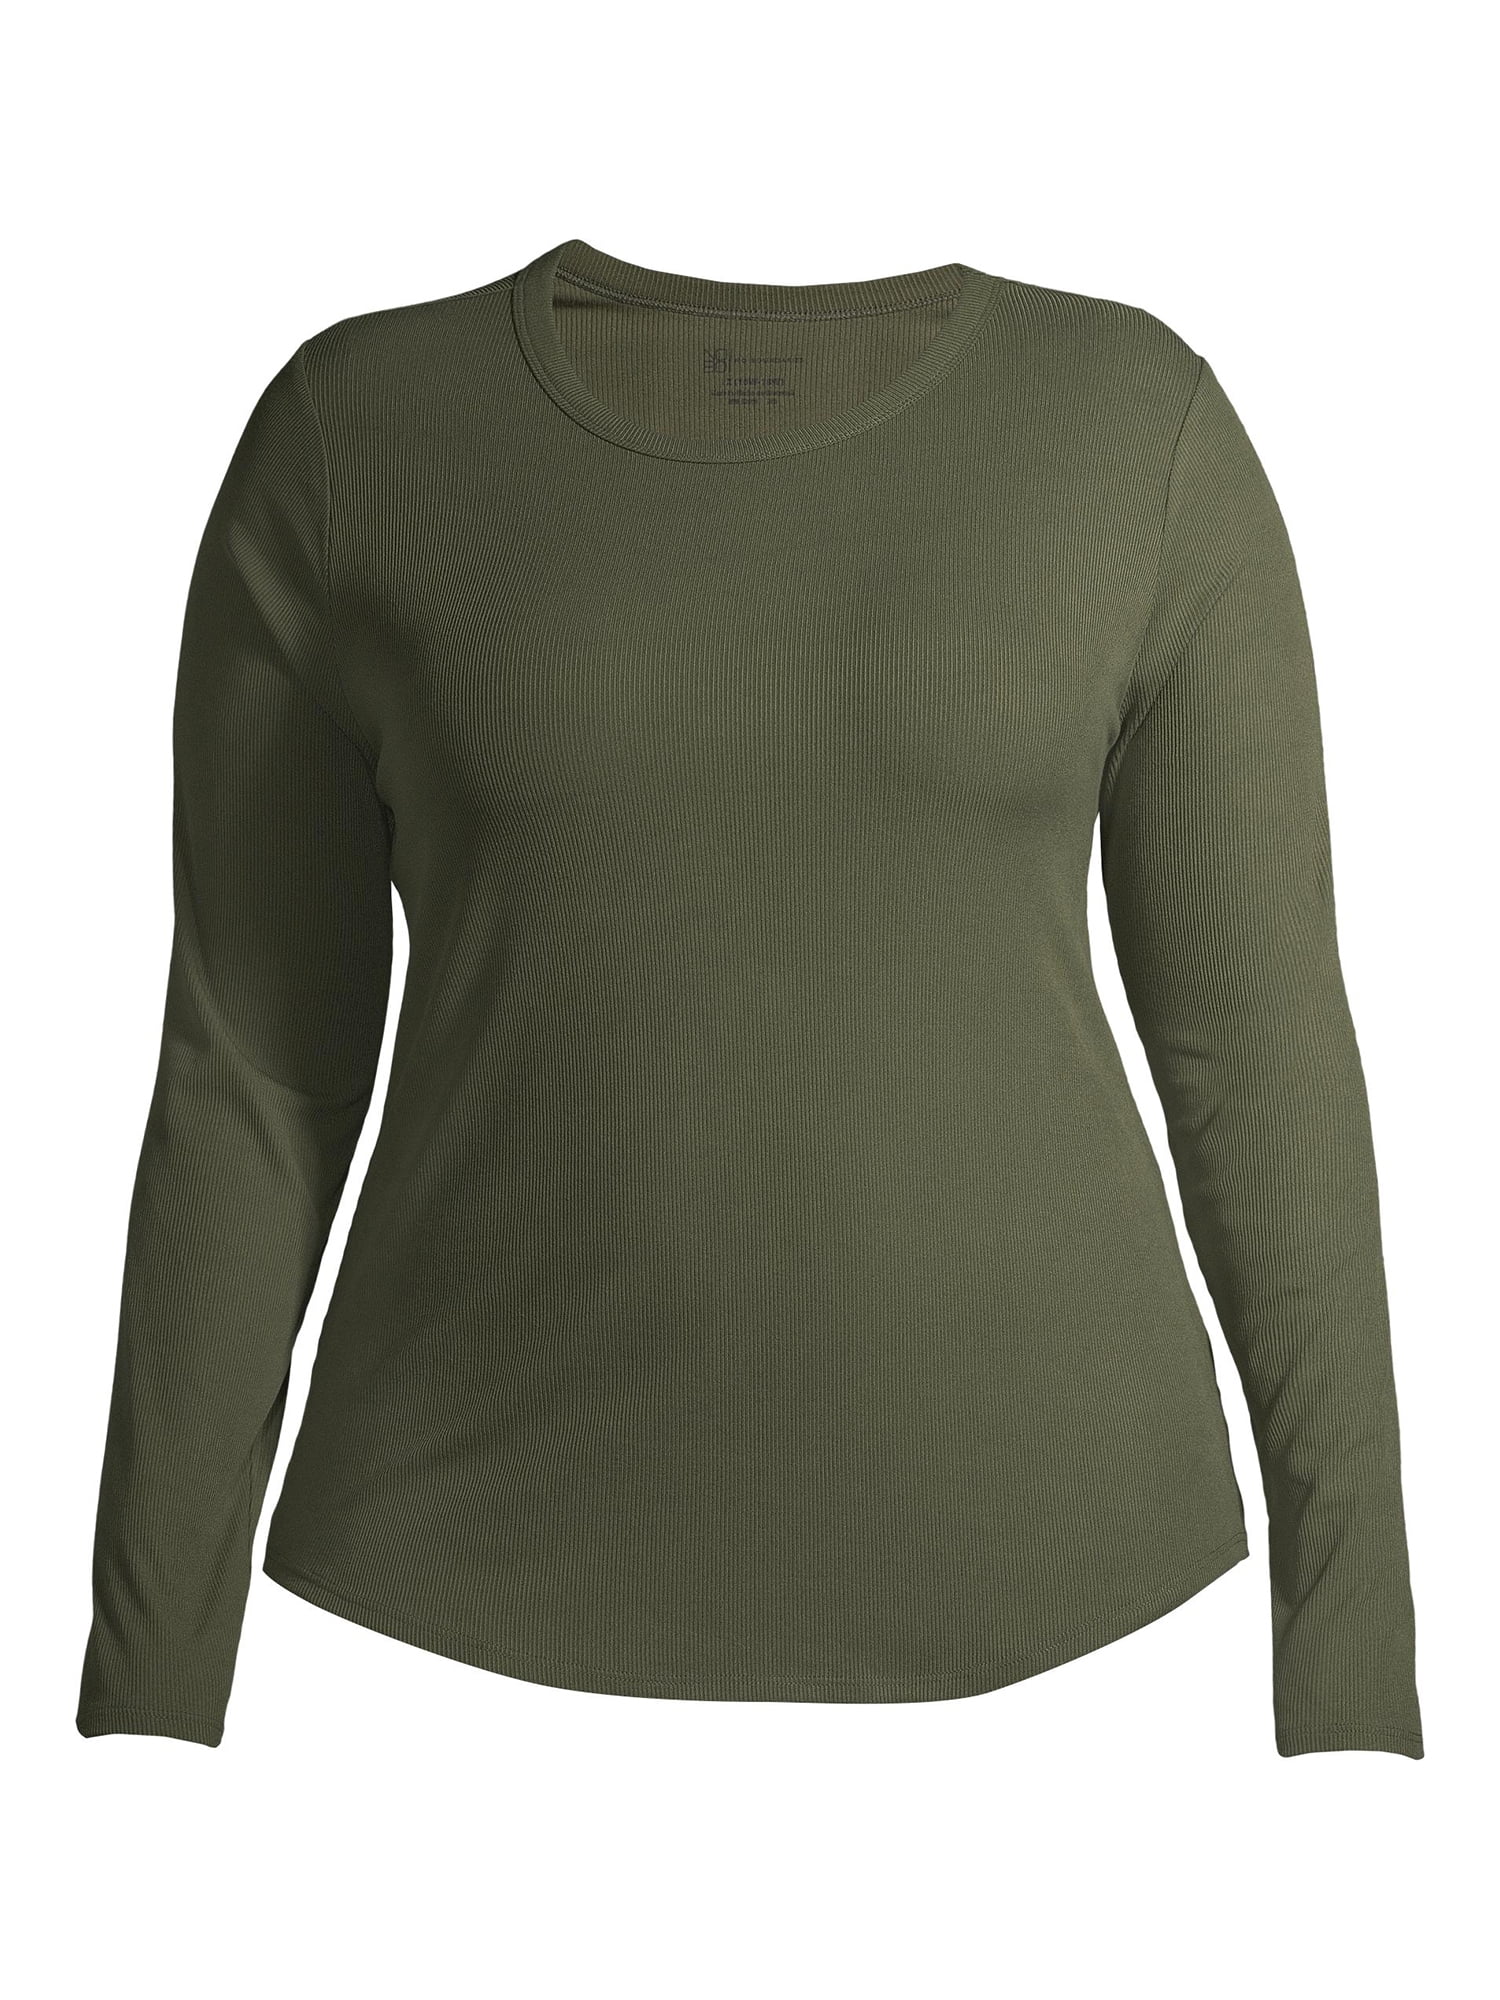 NO BOUNDARIES Olive Green SEMI-FITTED LAYERING Long Sleeve Tee Shirt Sz.  Jr. XS*